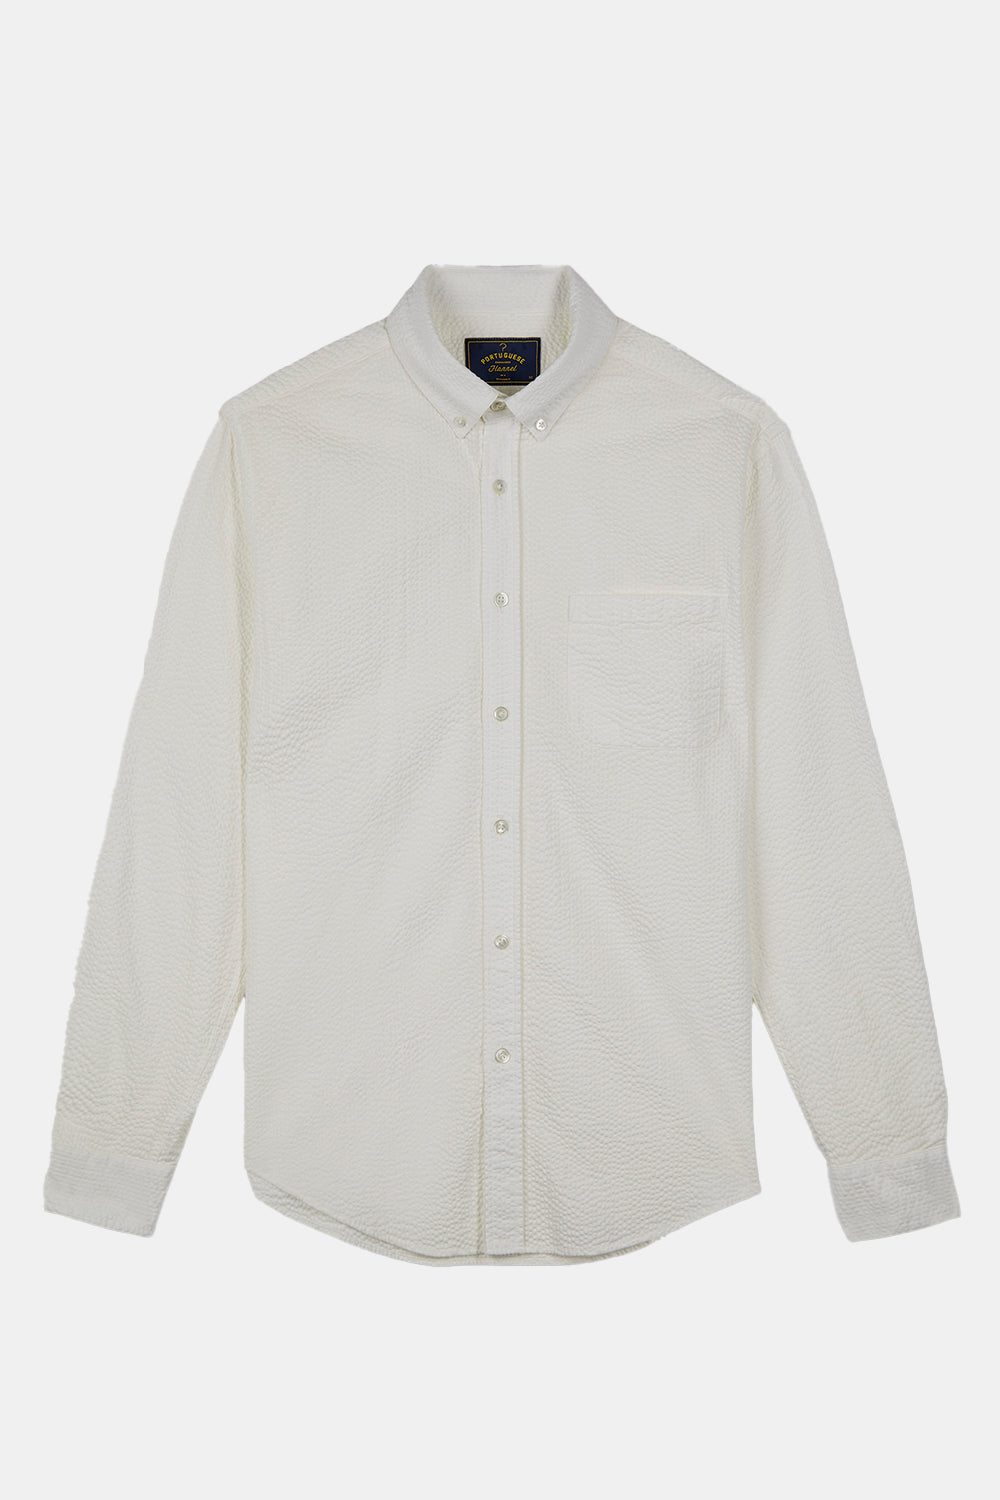 Portuguese Flannel Atlantico Shirt (White) | Number Six